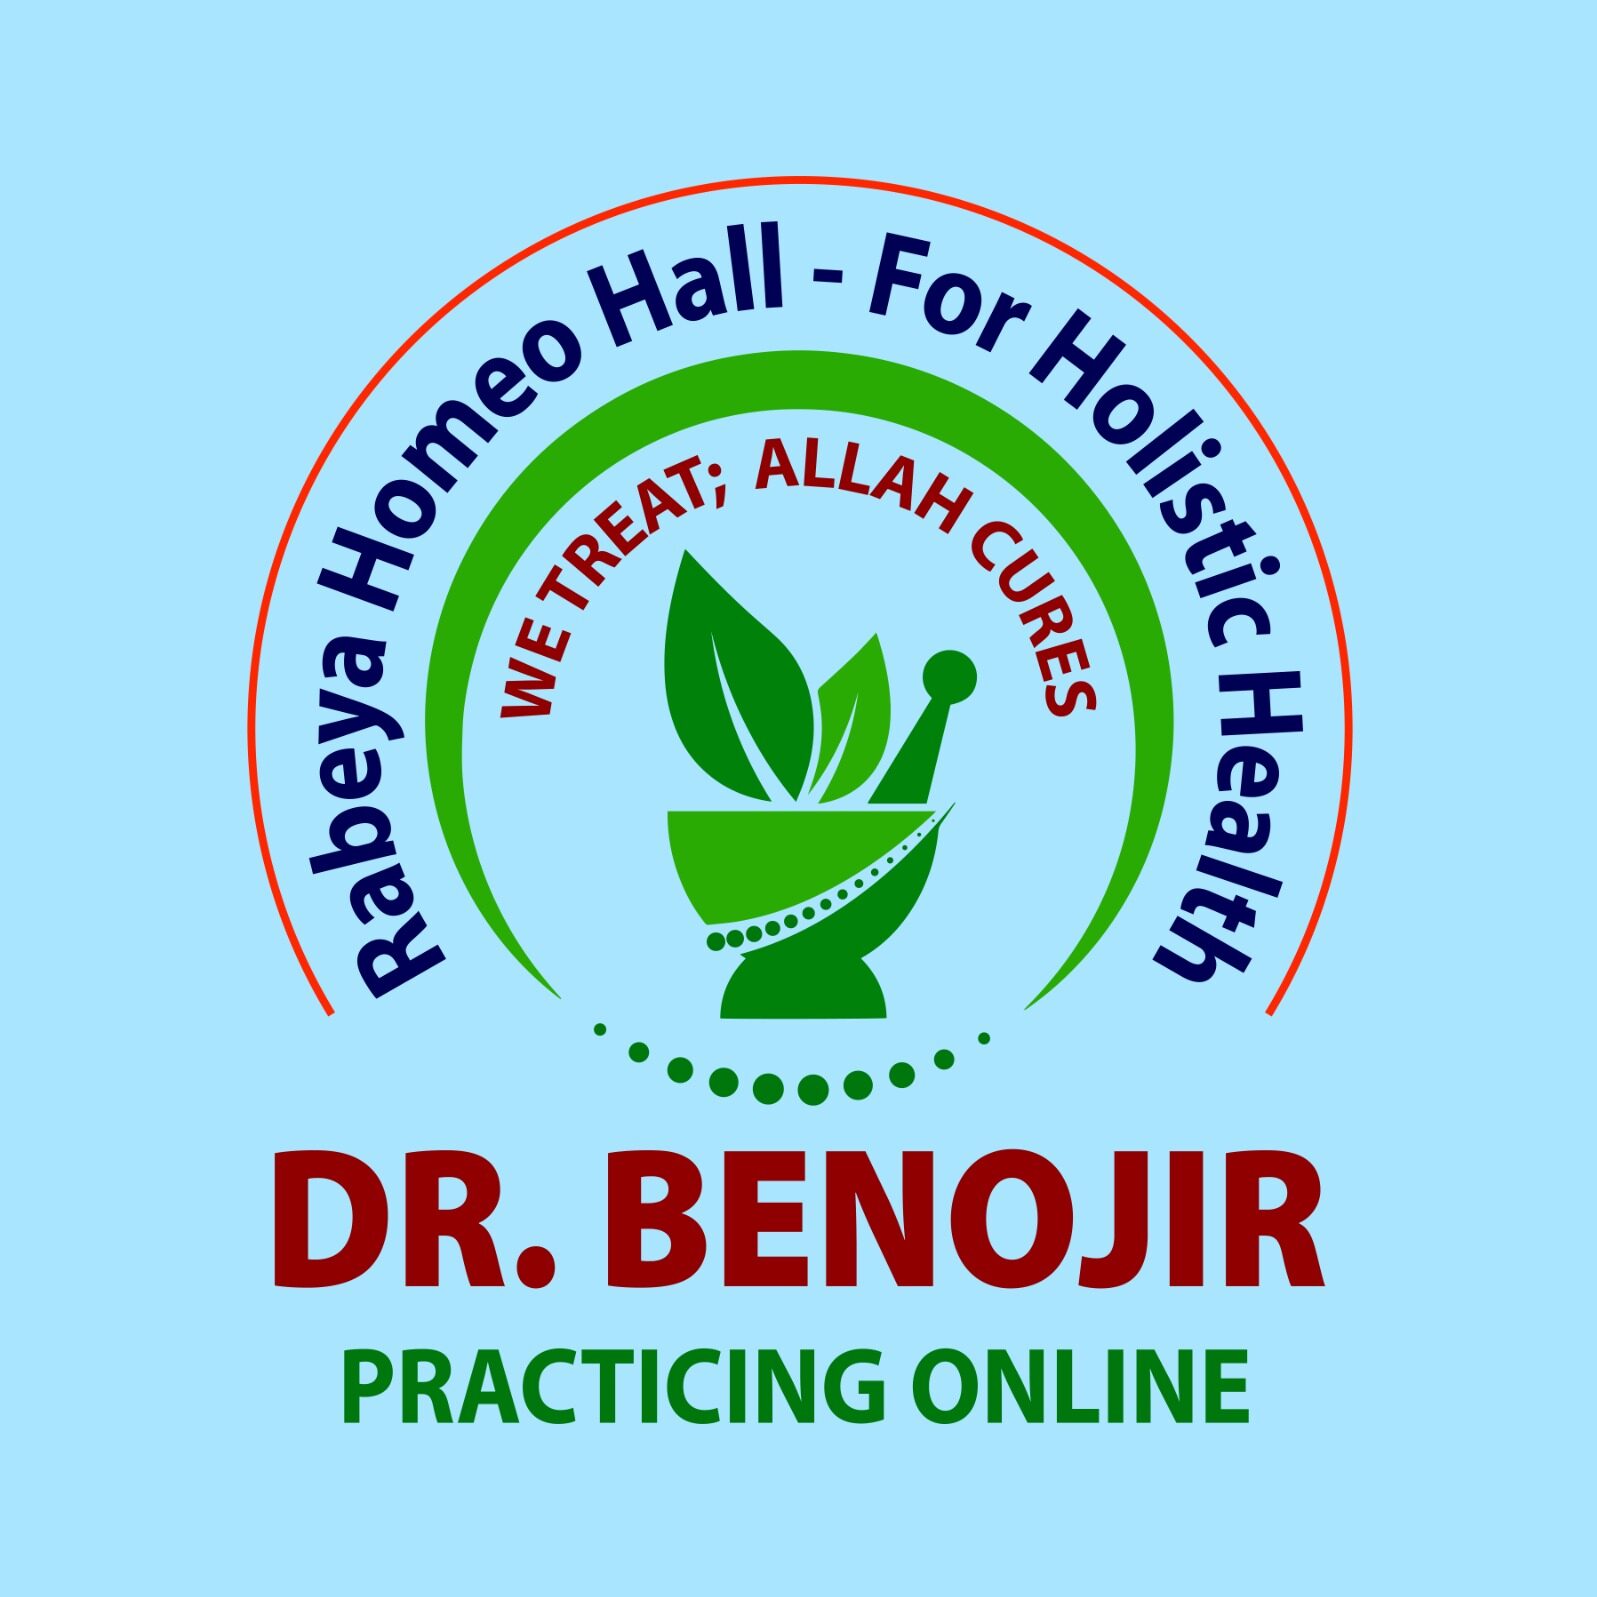 Dr. Benojir